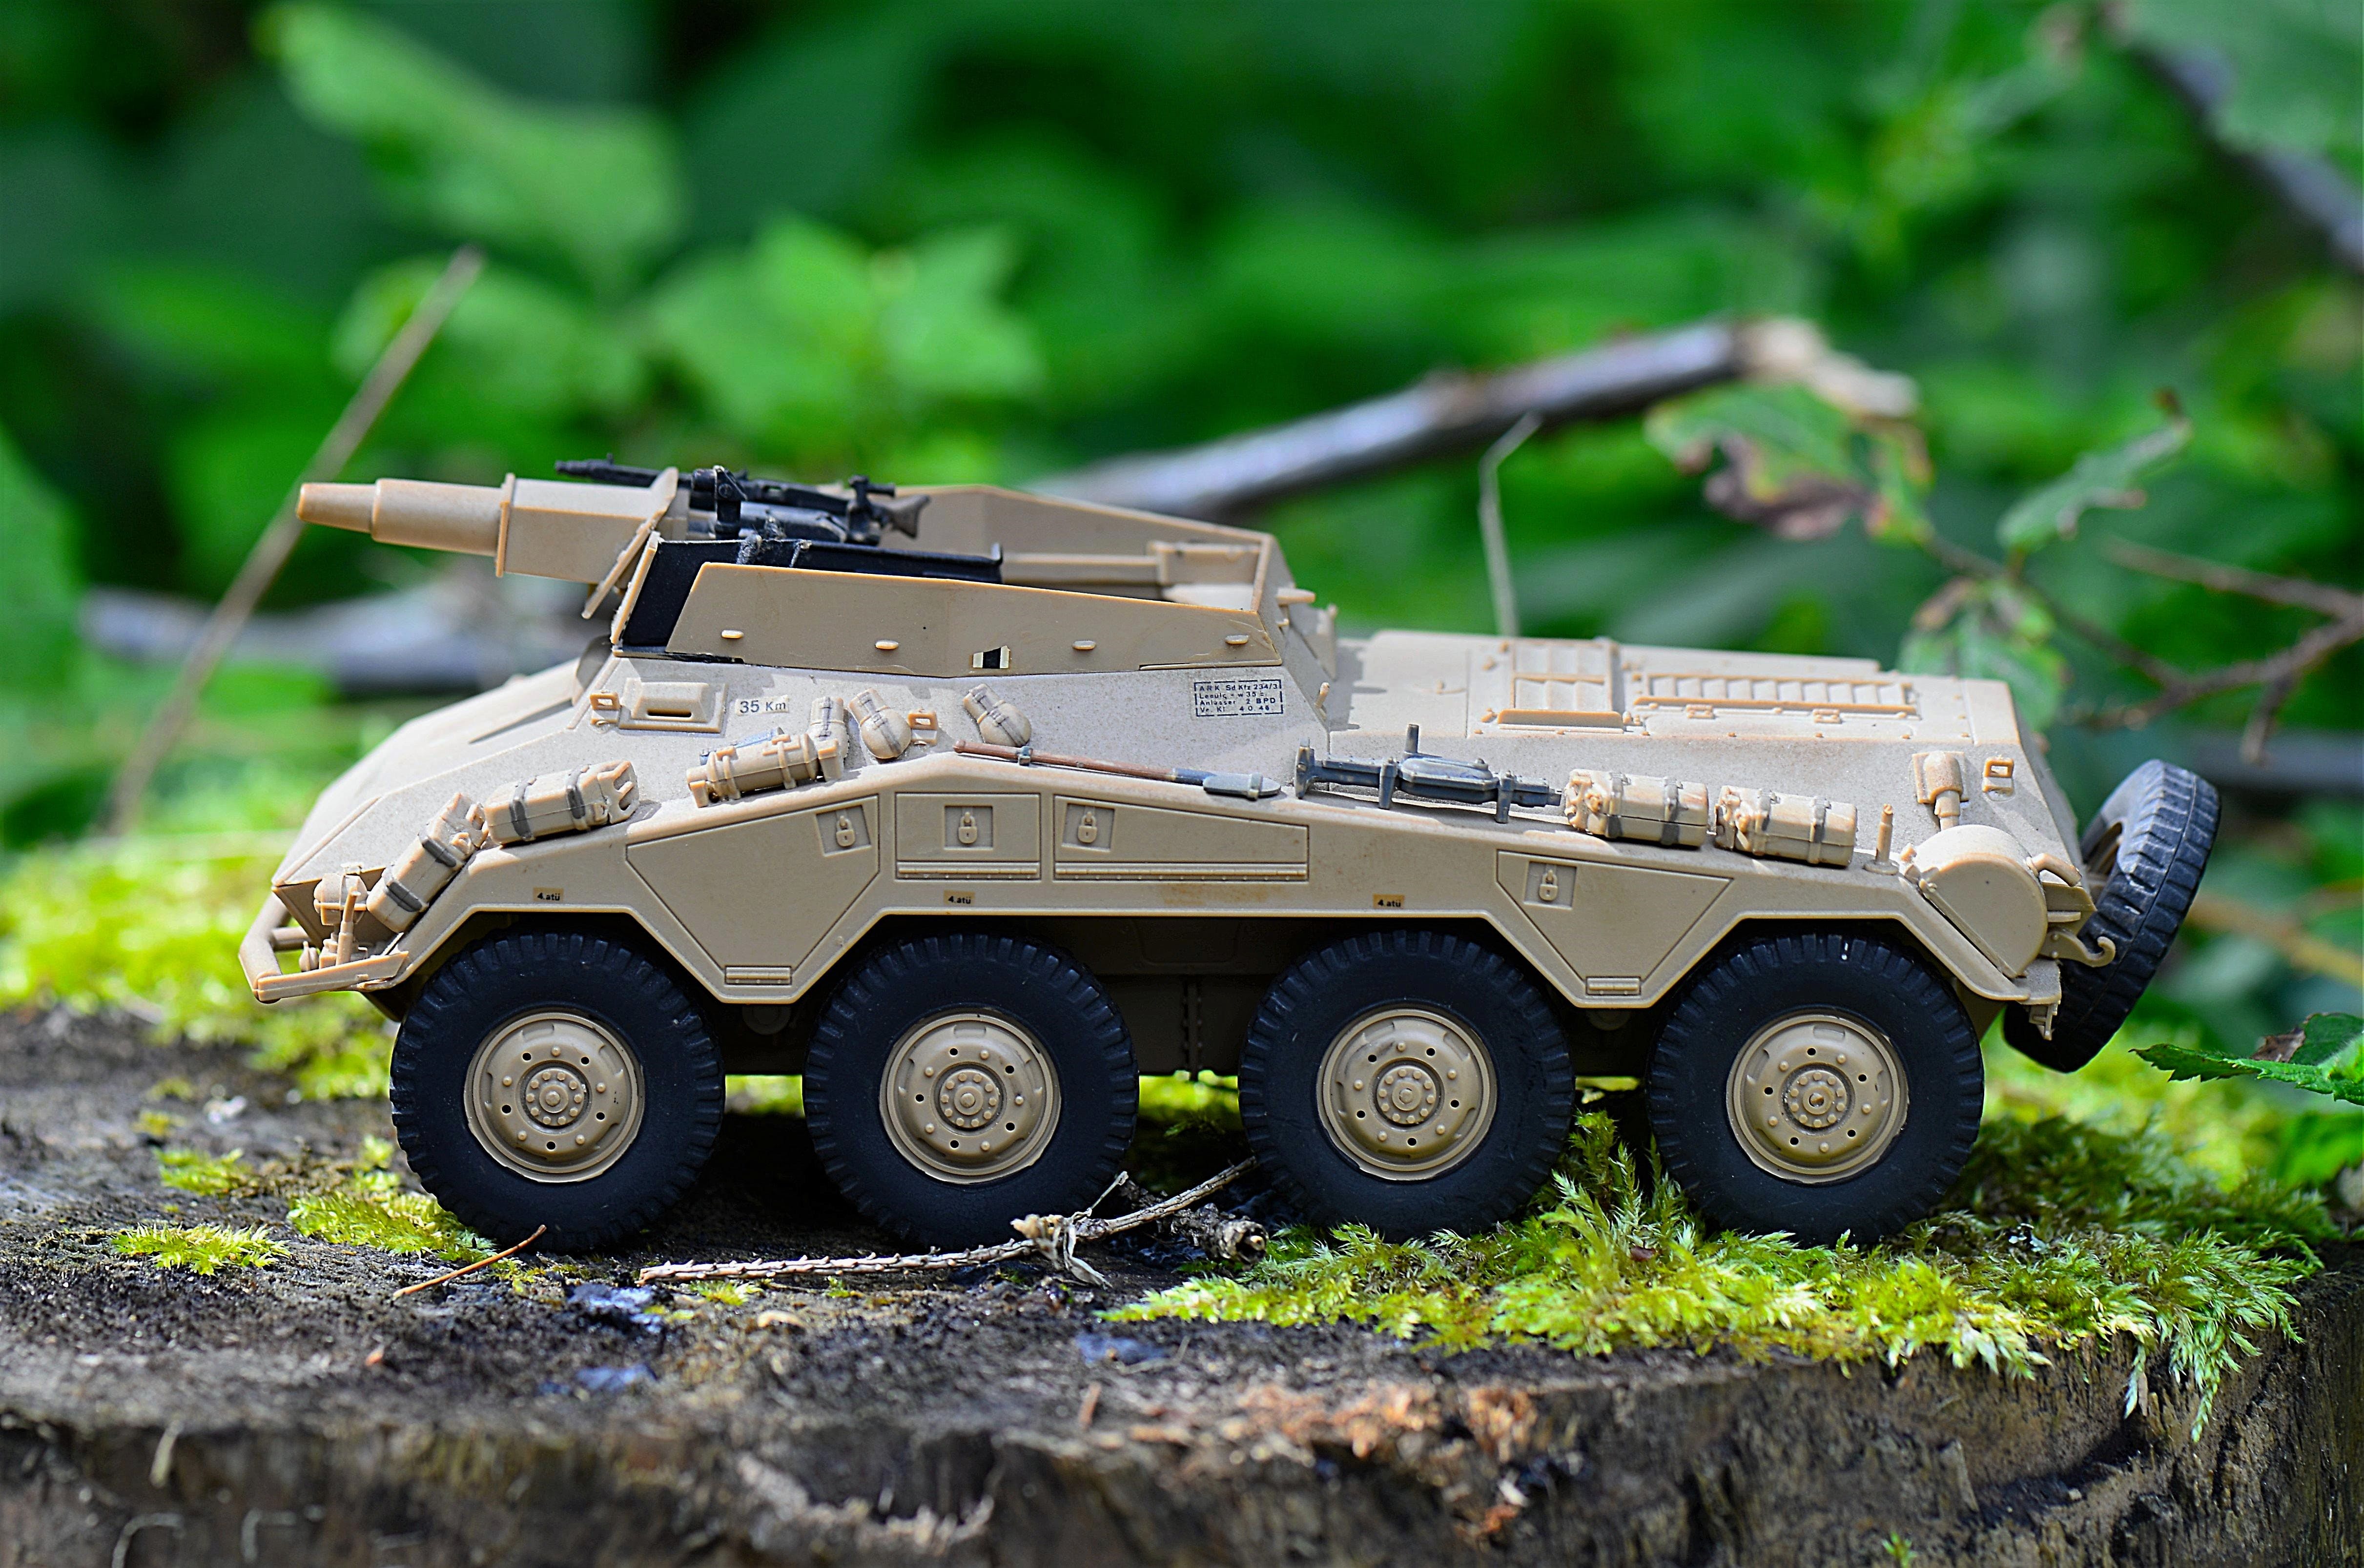 Free Tan Military Artillery Vehicle Toy on Wood Stump Stock Photo